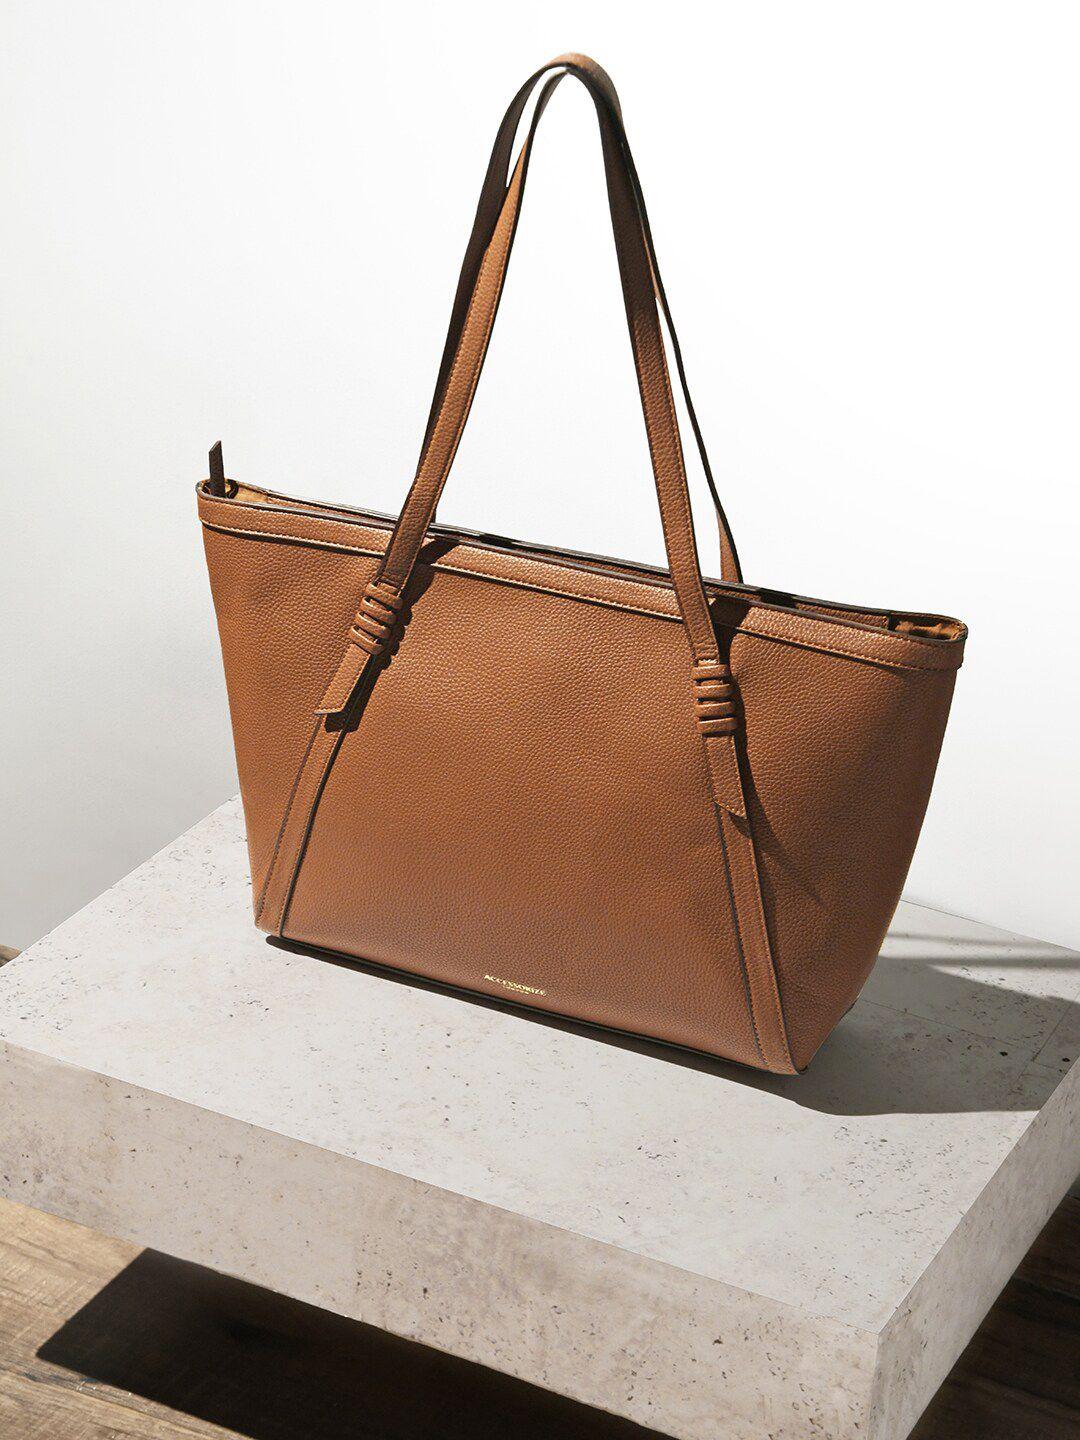 accessorize tan structured tote bag